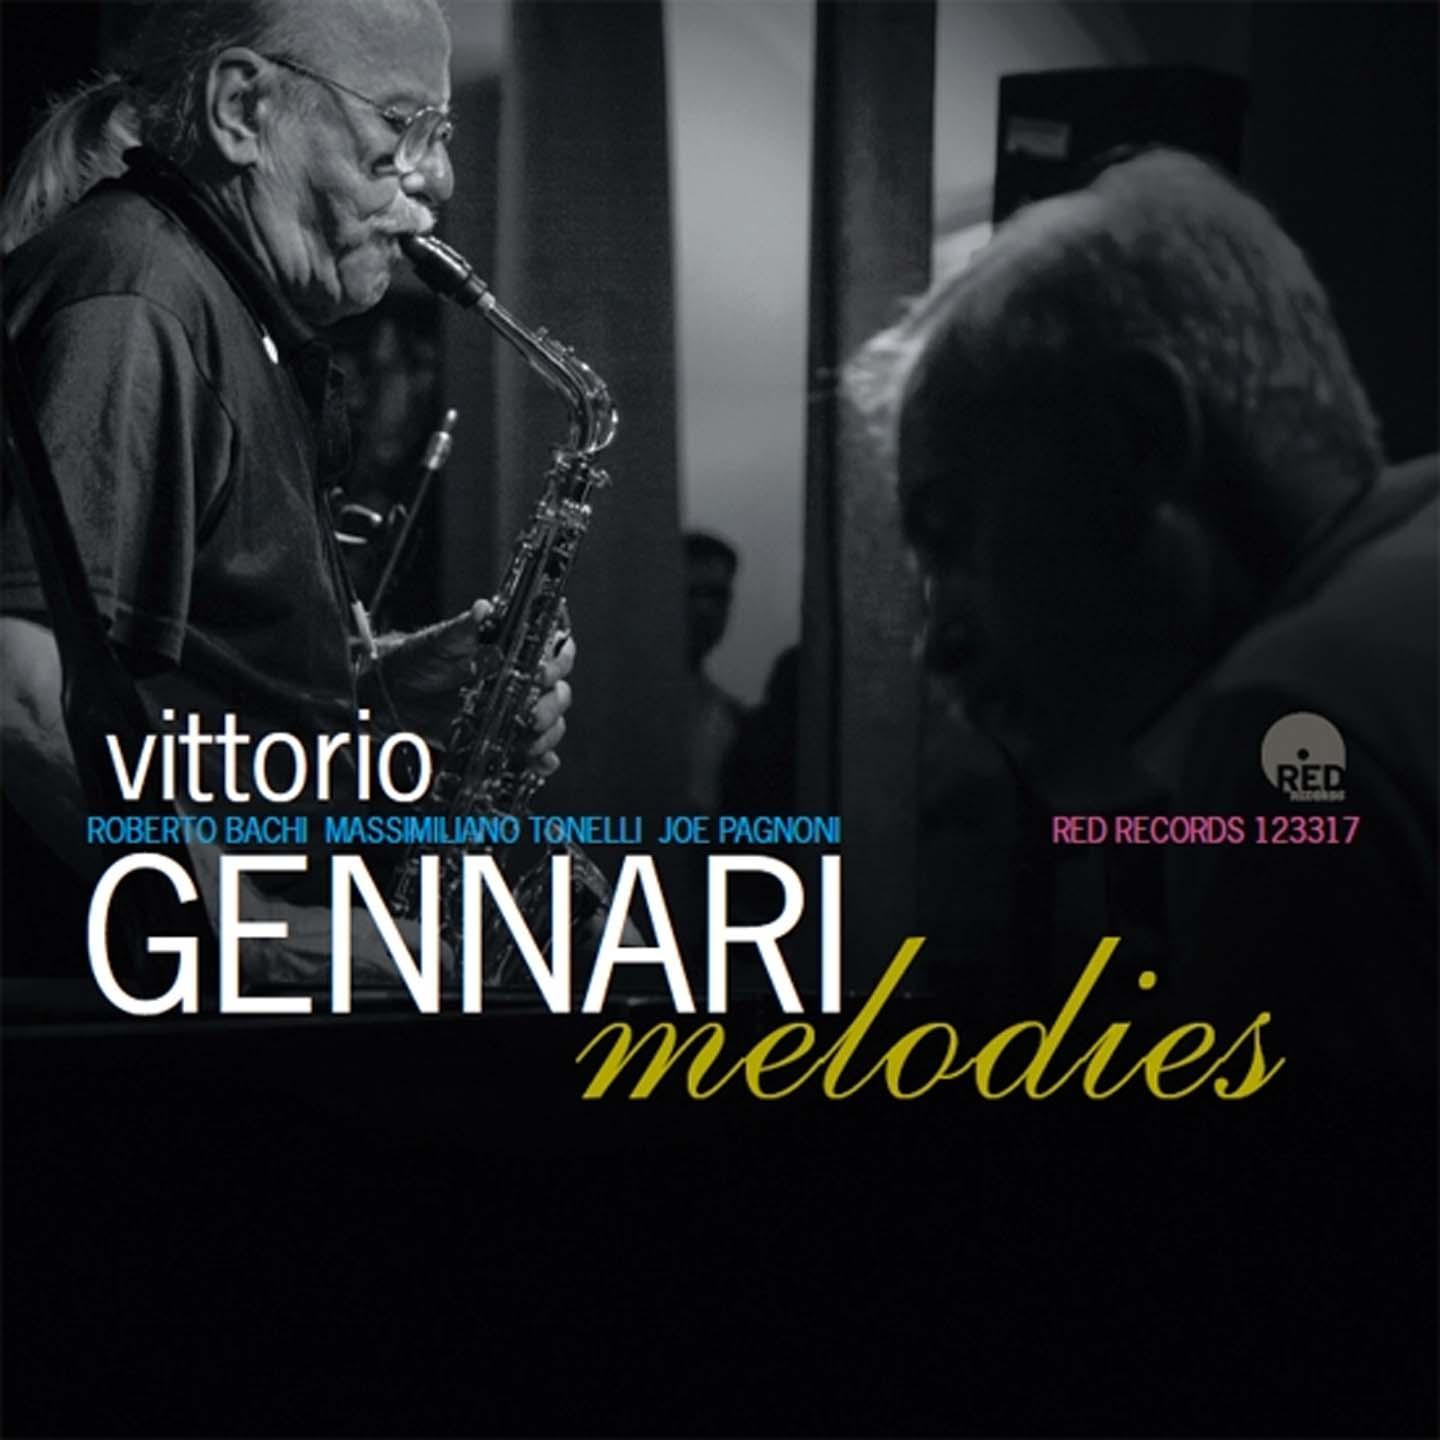 Vittorio Gennari - There is no greater love